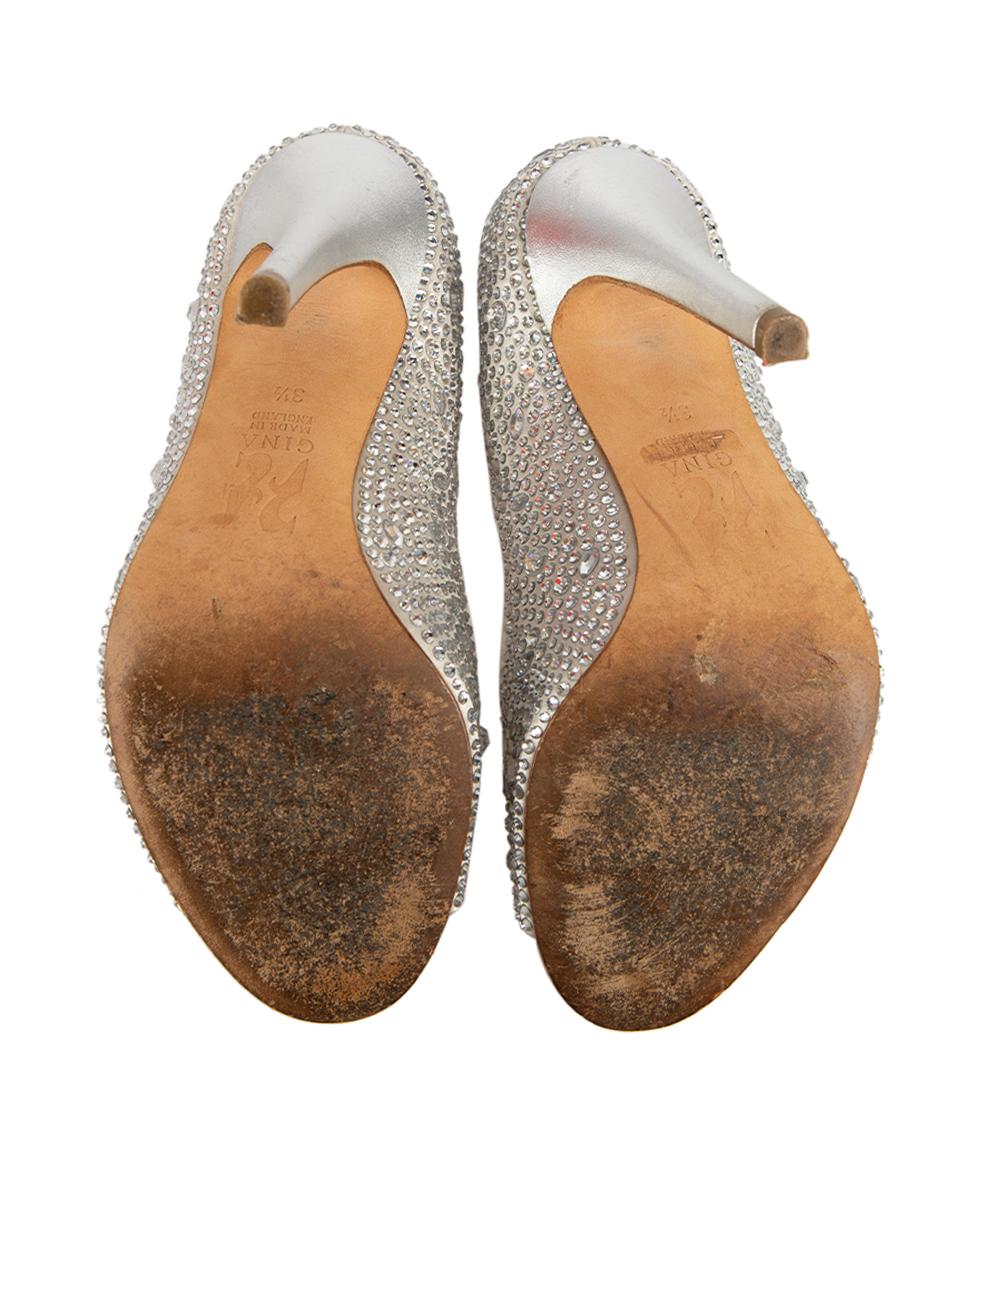 Women's Gina Silver Crystal Embellished Open Toe Heels Size UK 3.5 For Sale